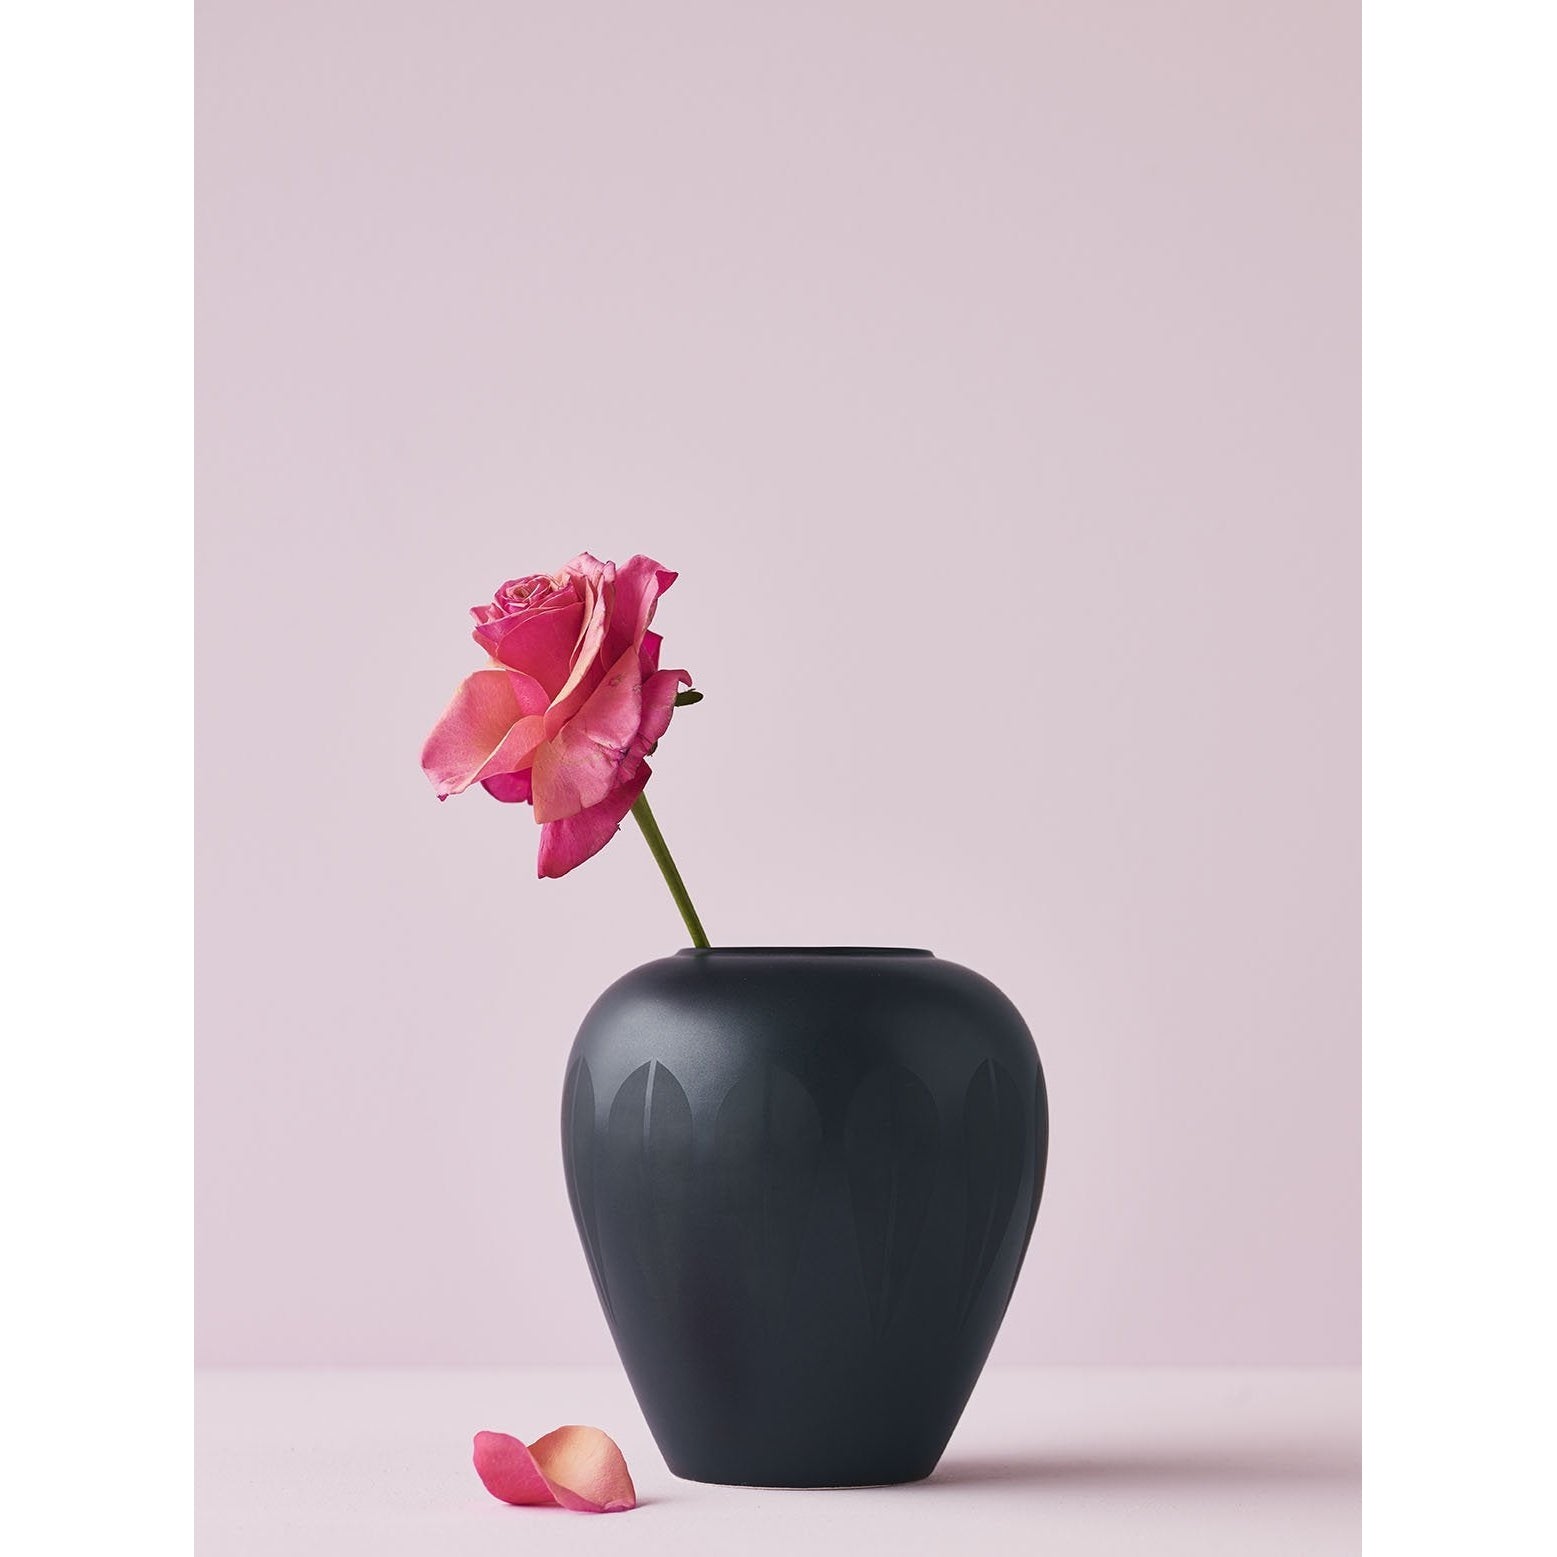 Lucie Kaas Arne Clausen Ceramic Vase Dark Red, 11cm